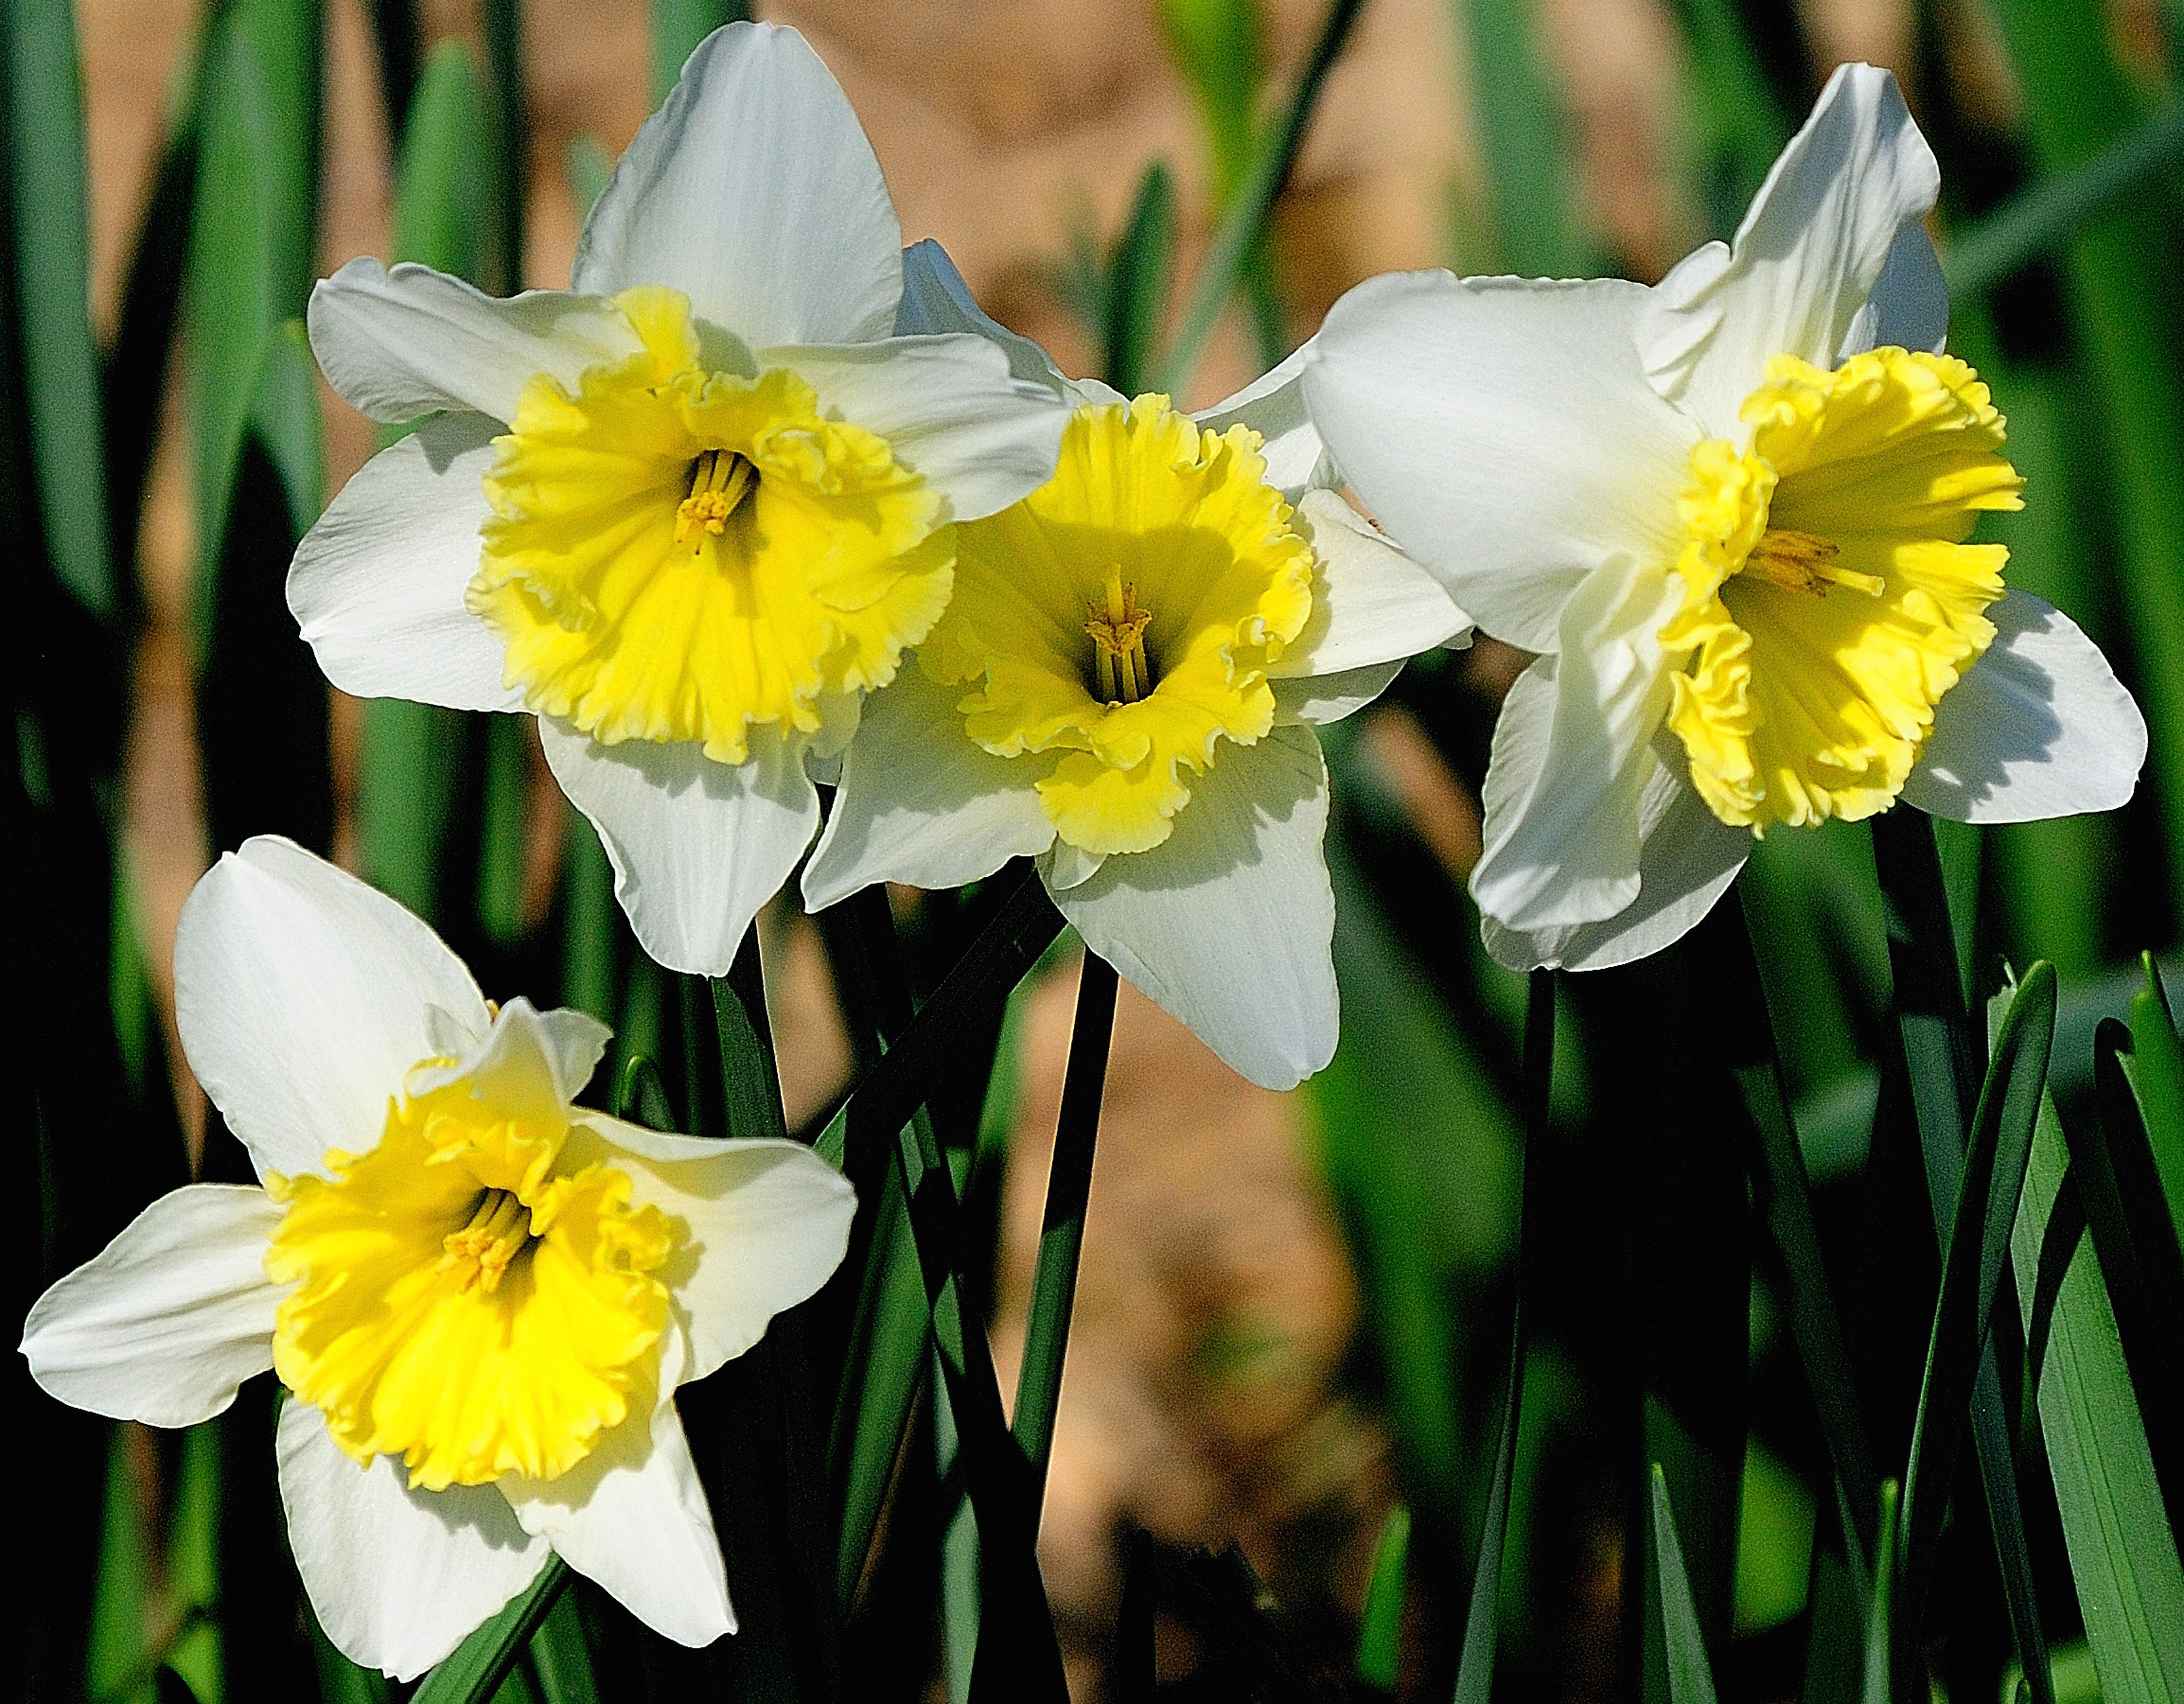 'Ice Follies' daffodils return faithfully each year to the Coastal Georgia Botanical Gardens in Savannah, Georgia.